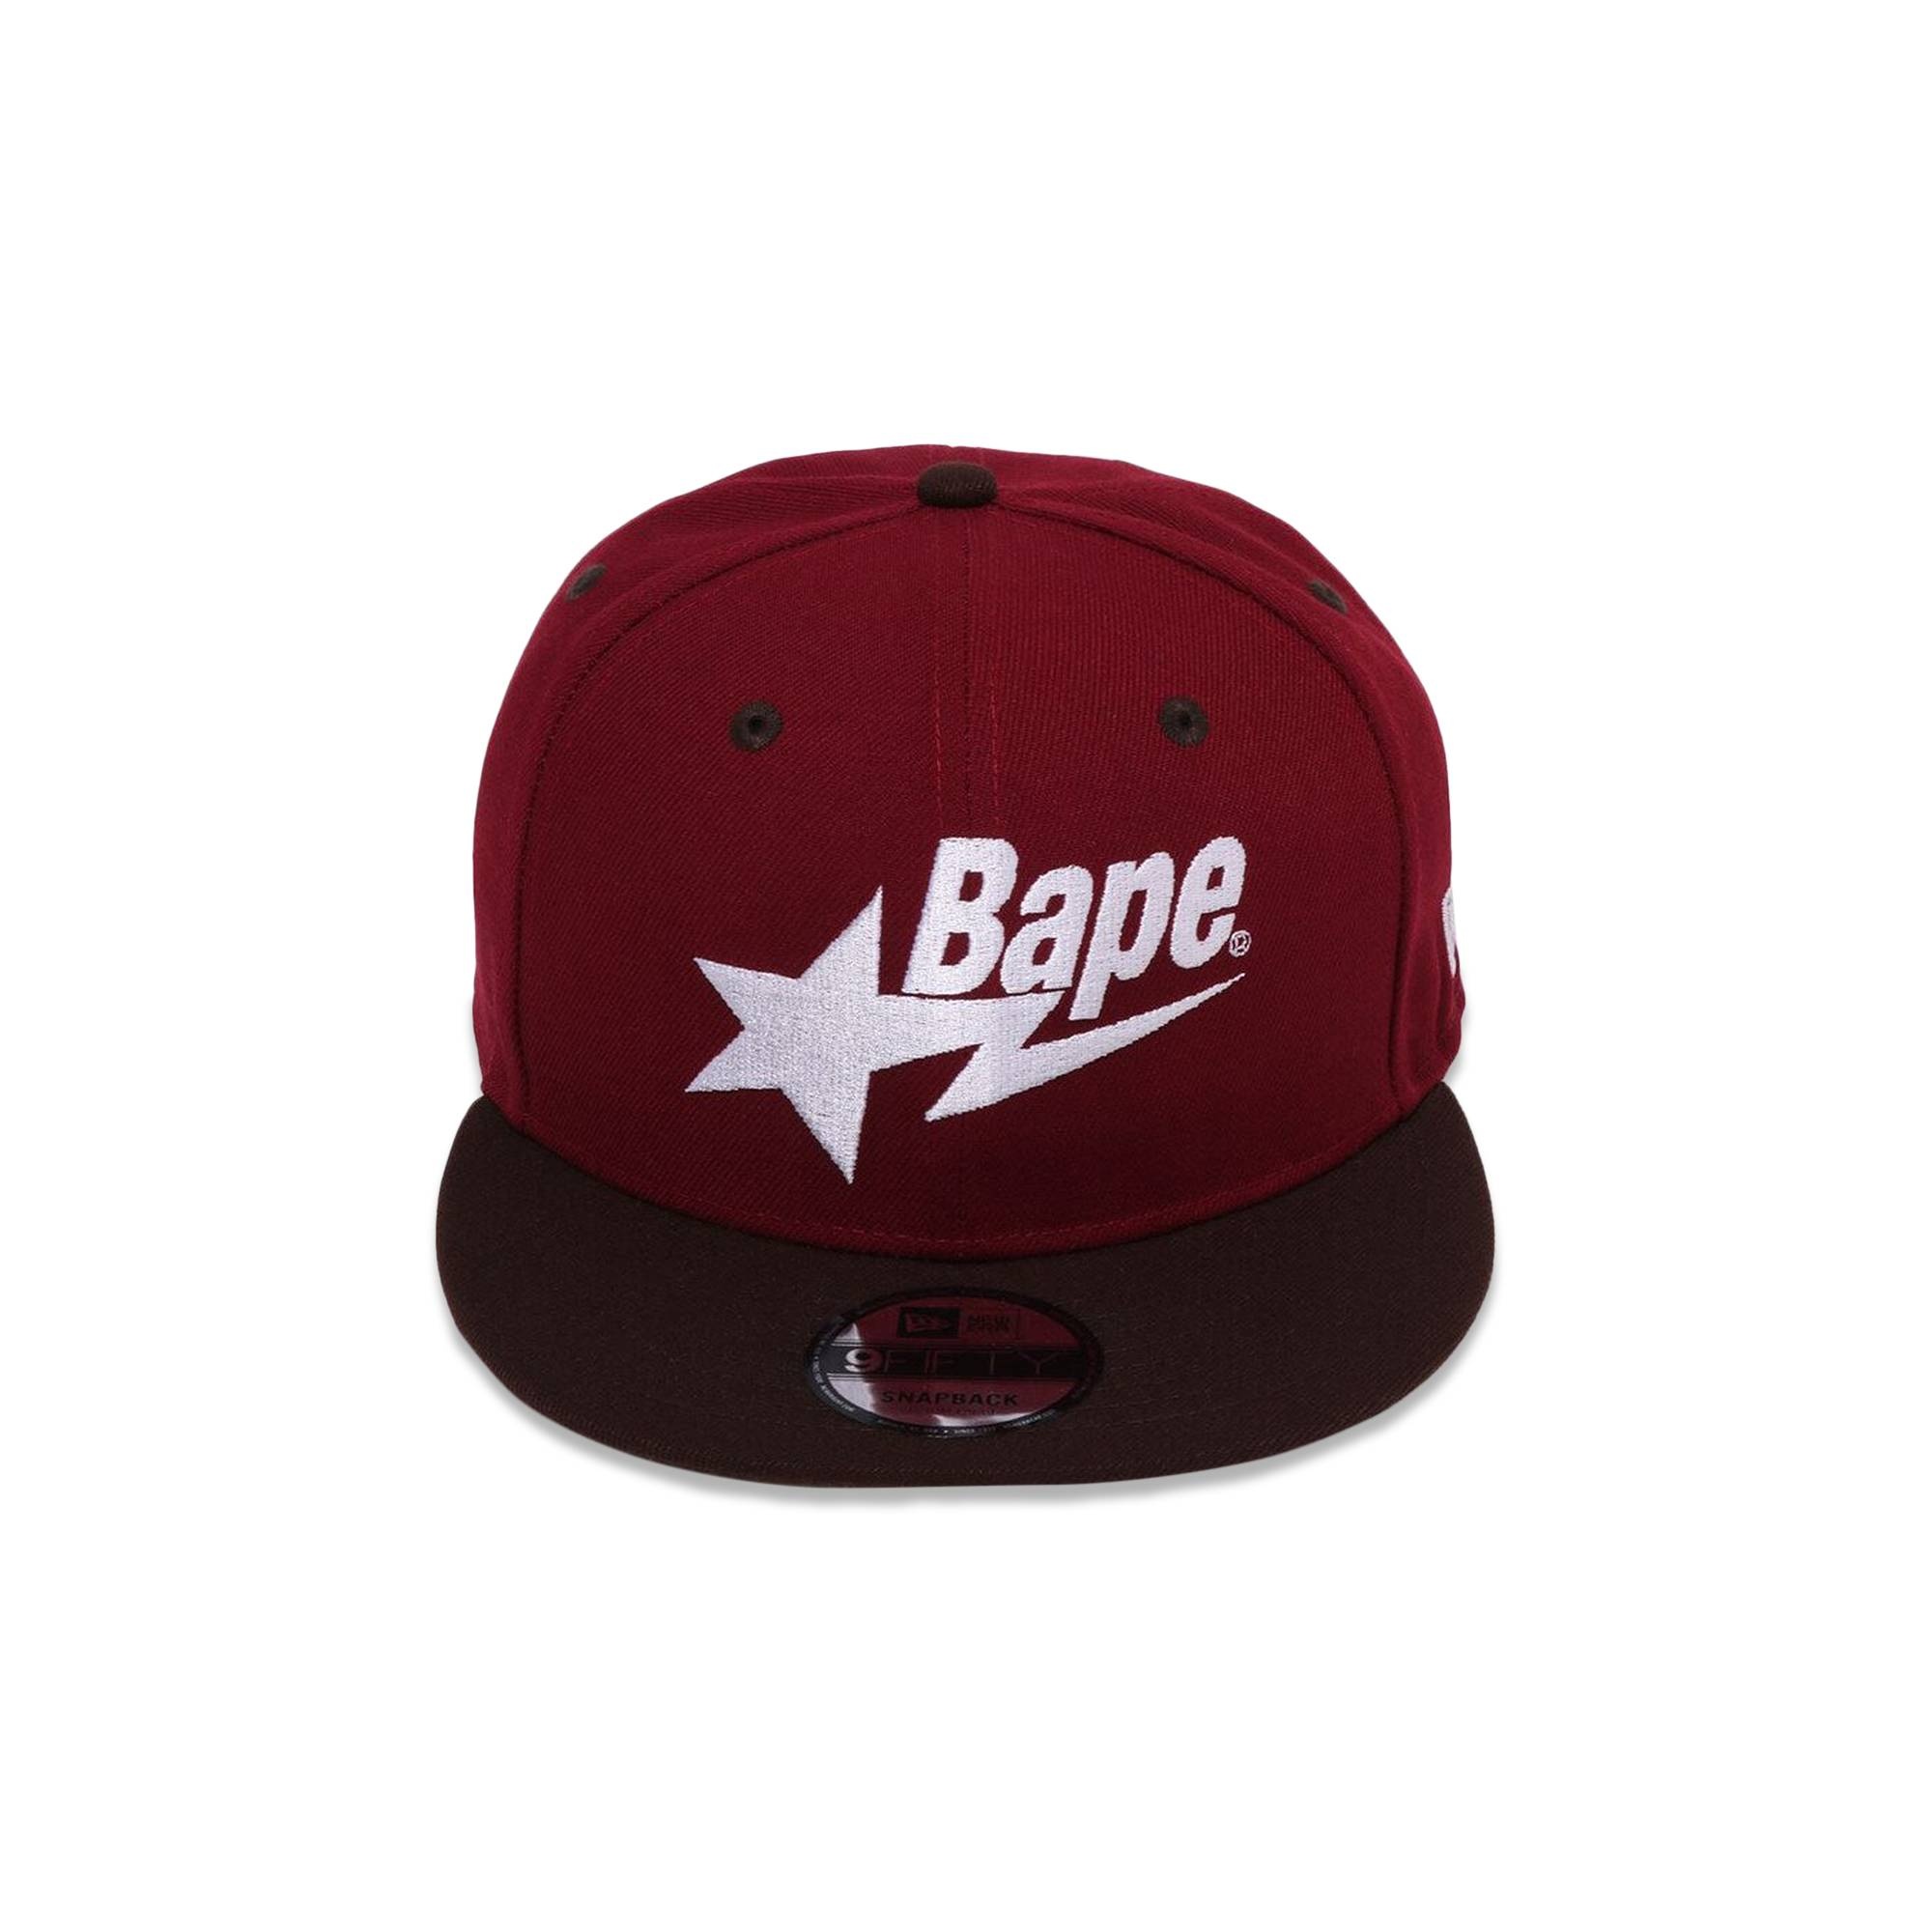 BAPE Bapesta New Era 9FIFTY Cap 'Red' - 1